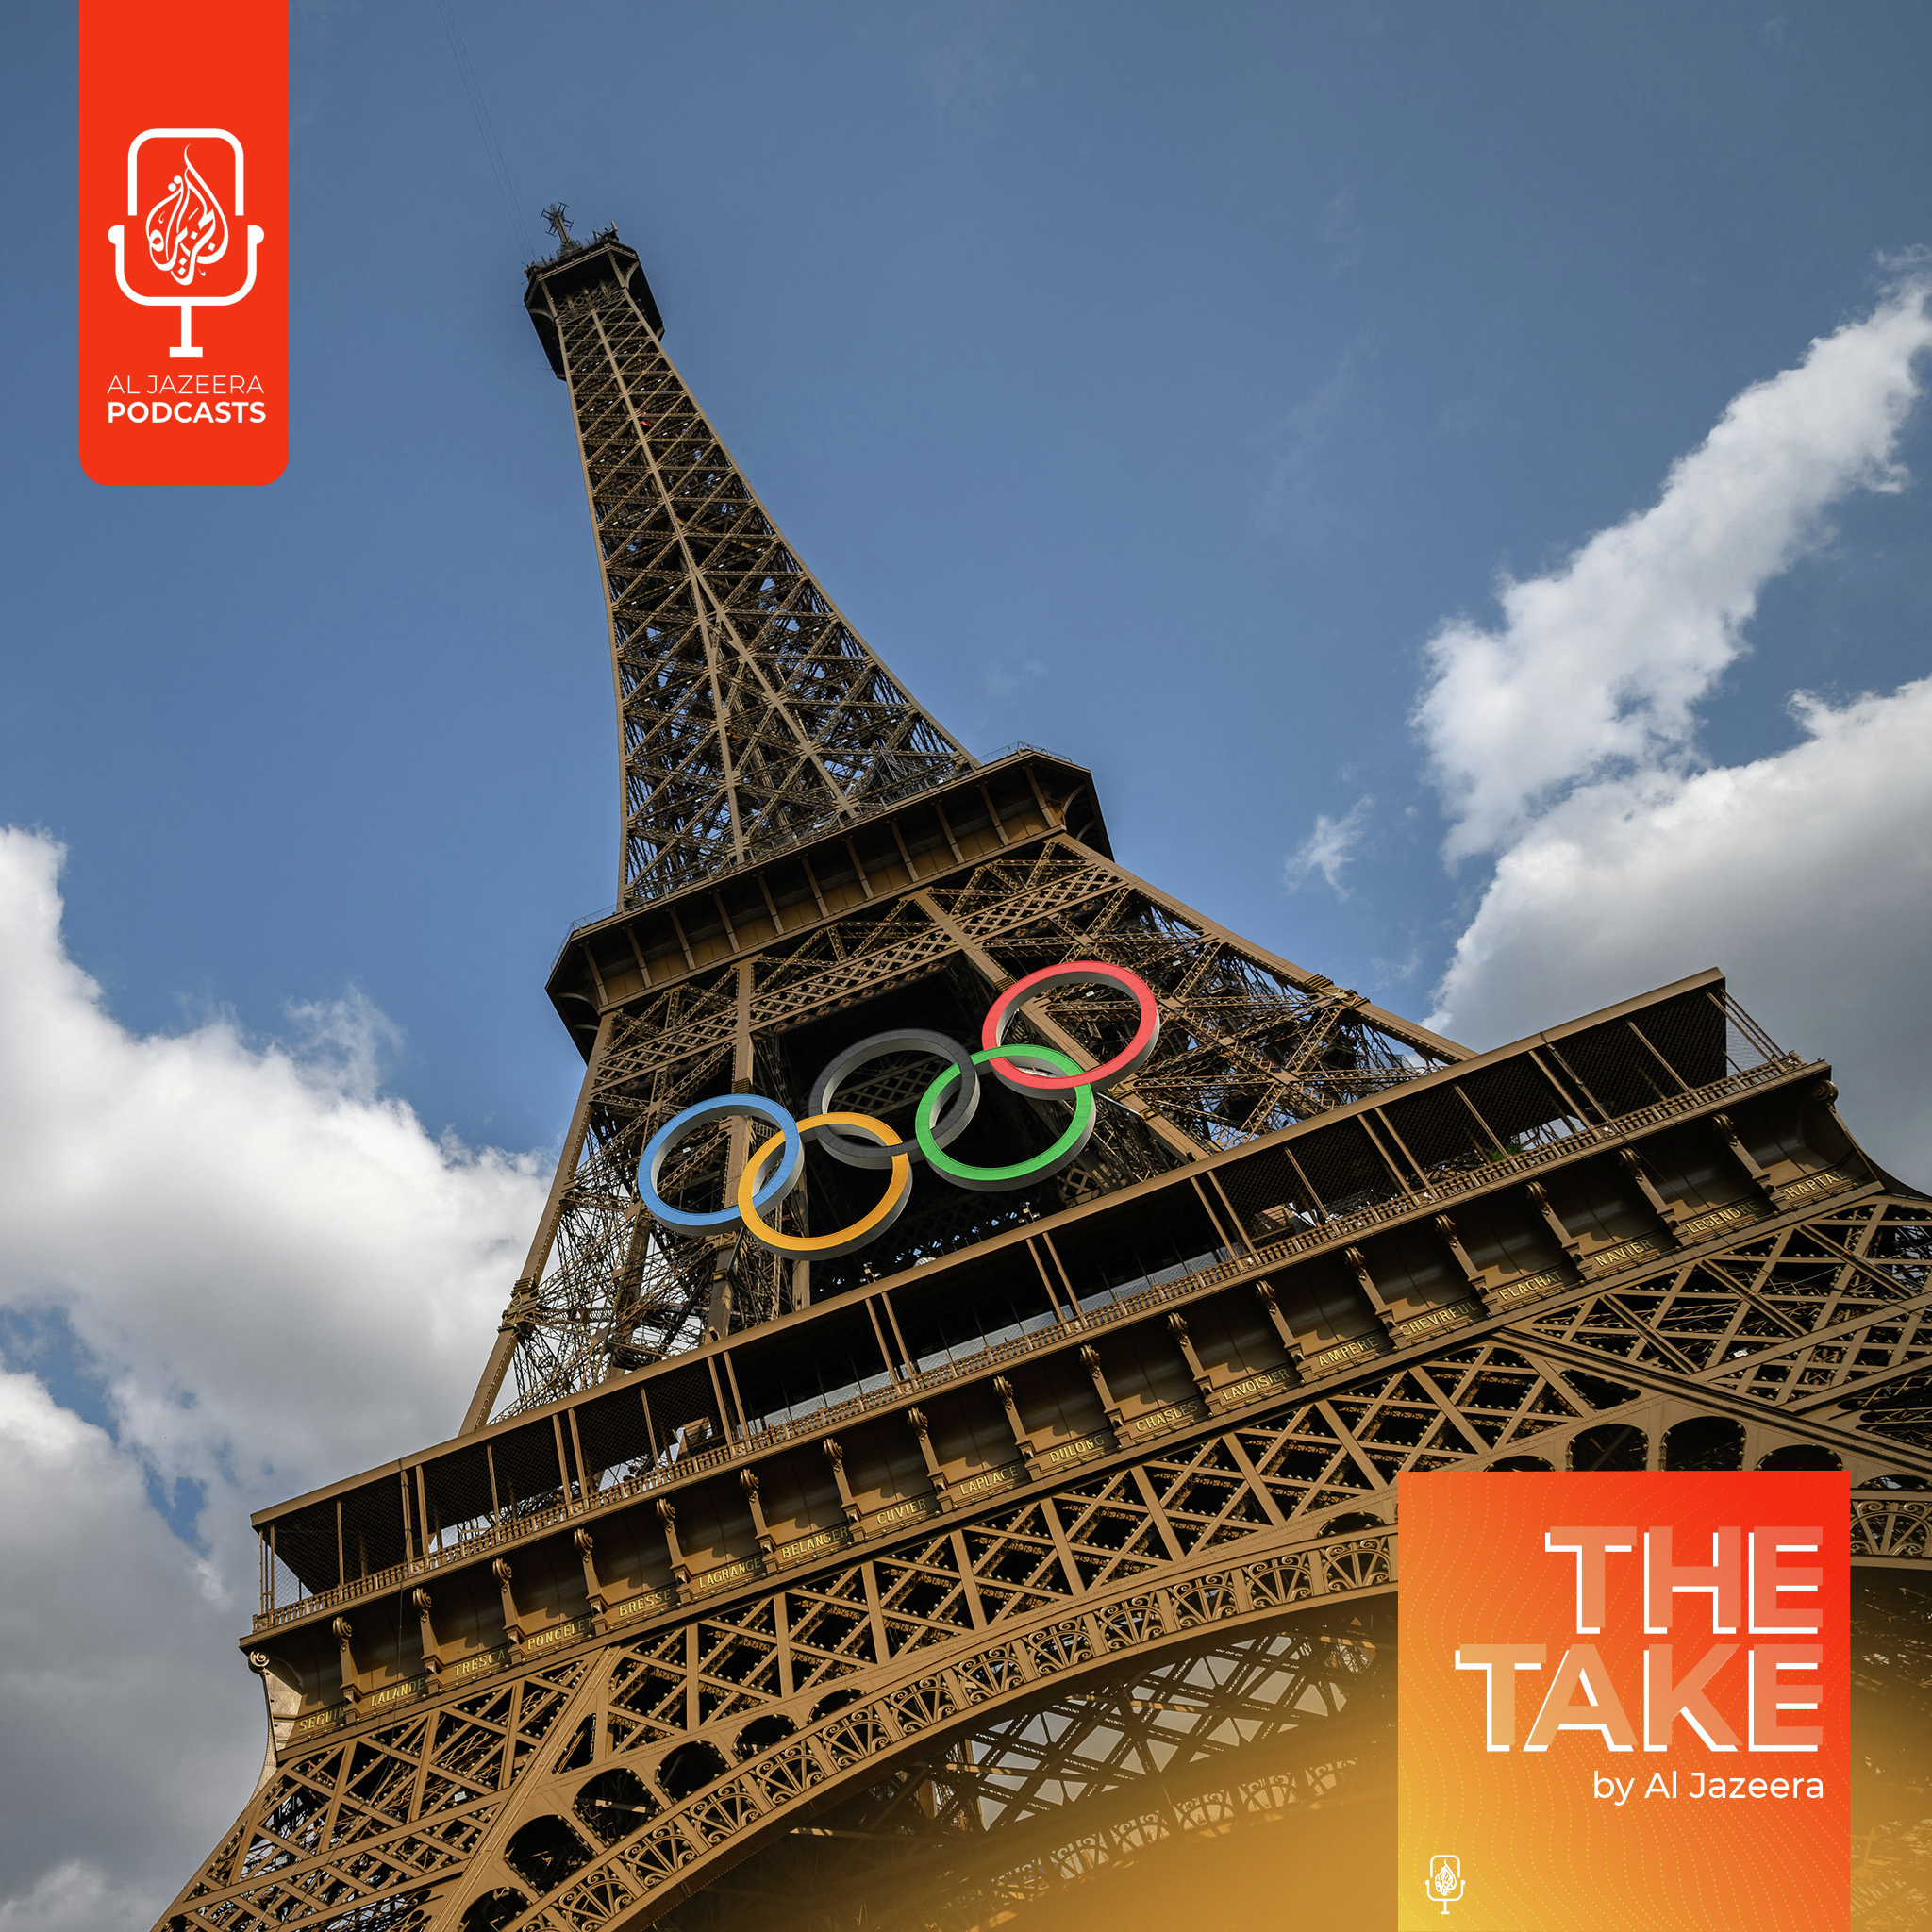 Joy and politics collide at the Paris Olympics 2024